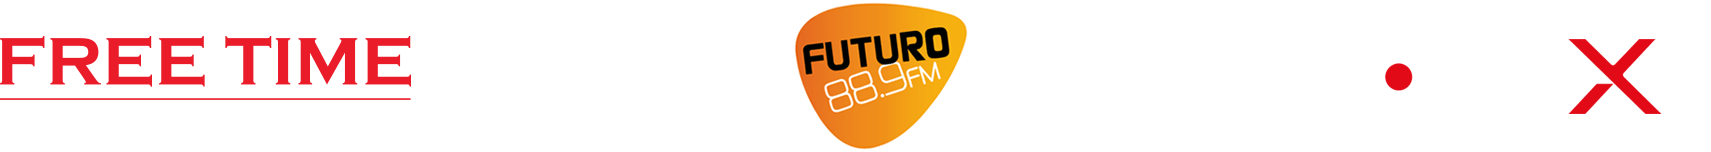 Free Time - Radio Futuro 88.9 FM - Rockaxis